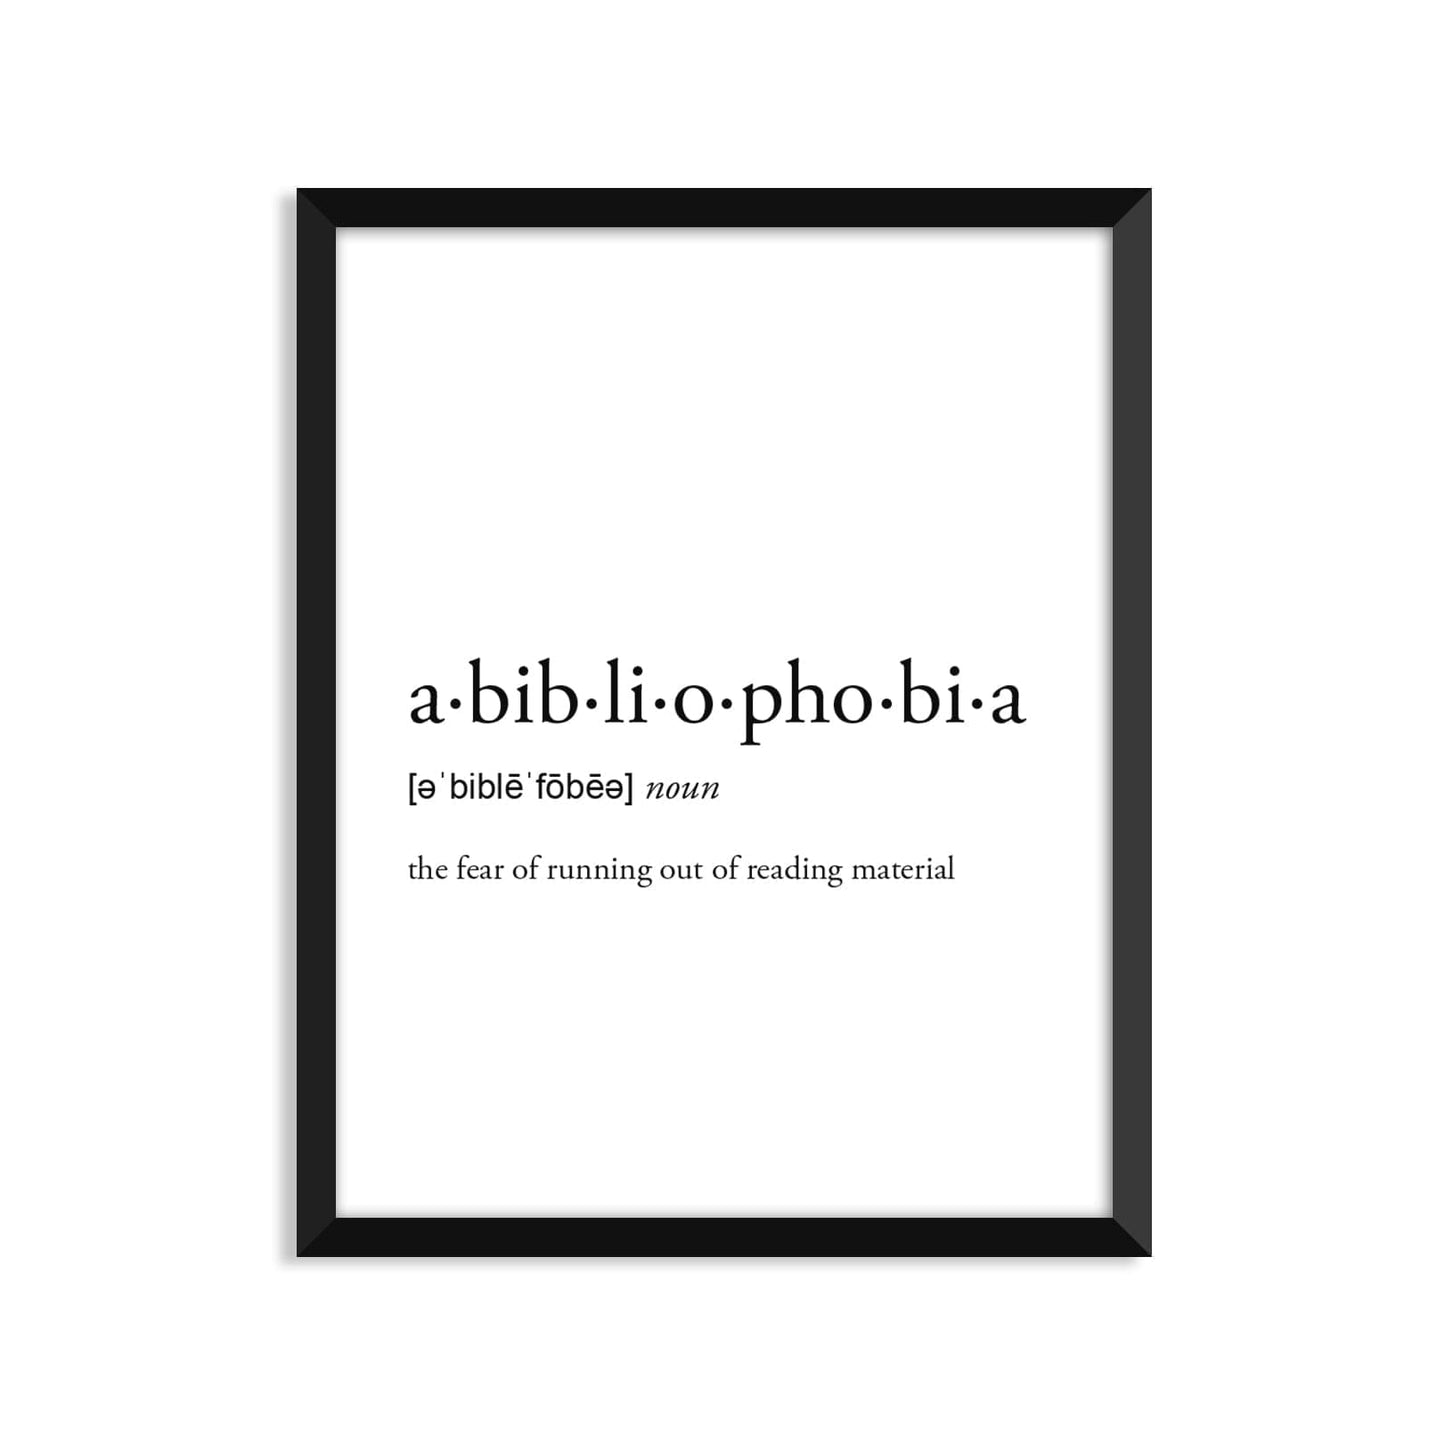 Abibliophobia